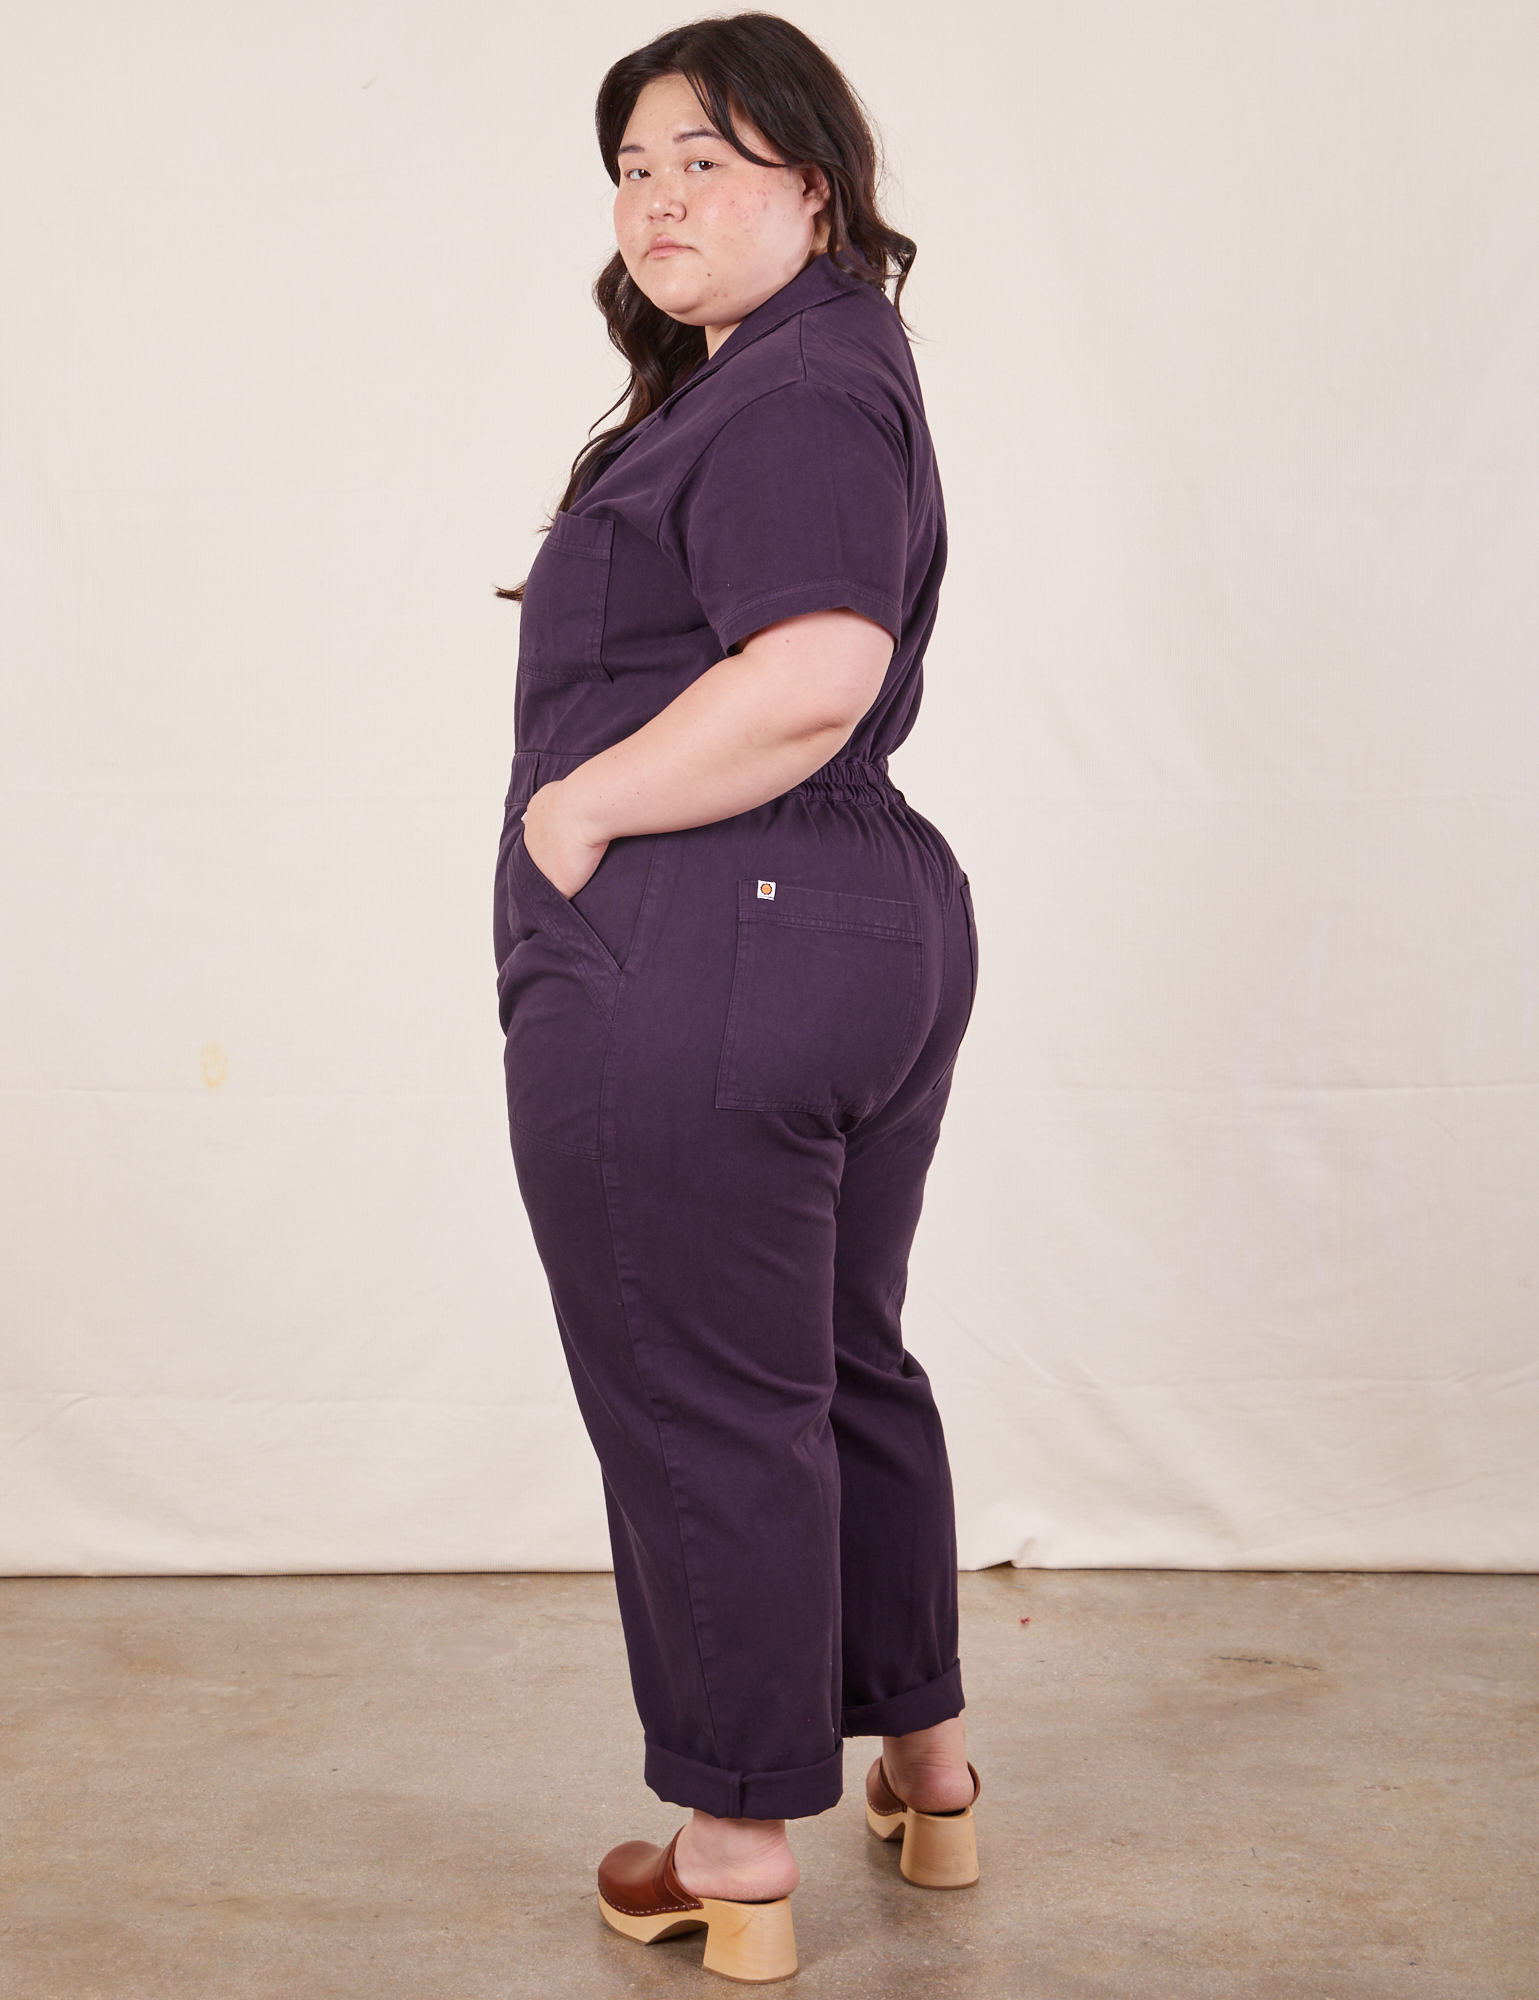 Side view of Short Sleeve Jumpsuit in Nebula Purple worn by Ashley.